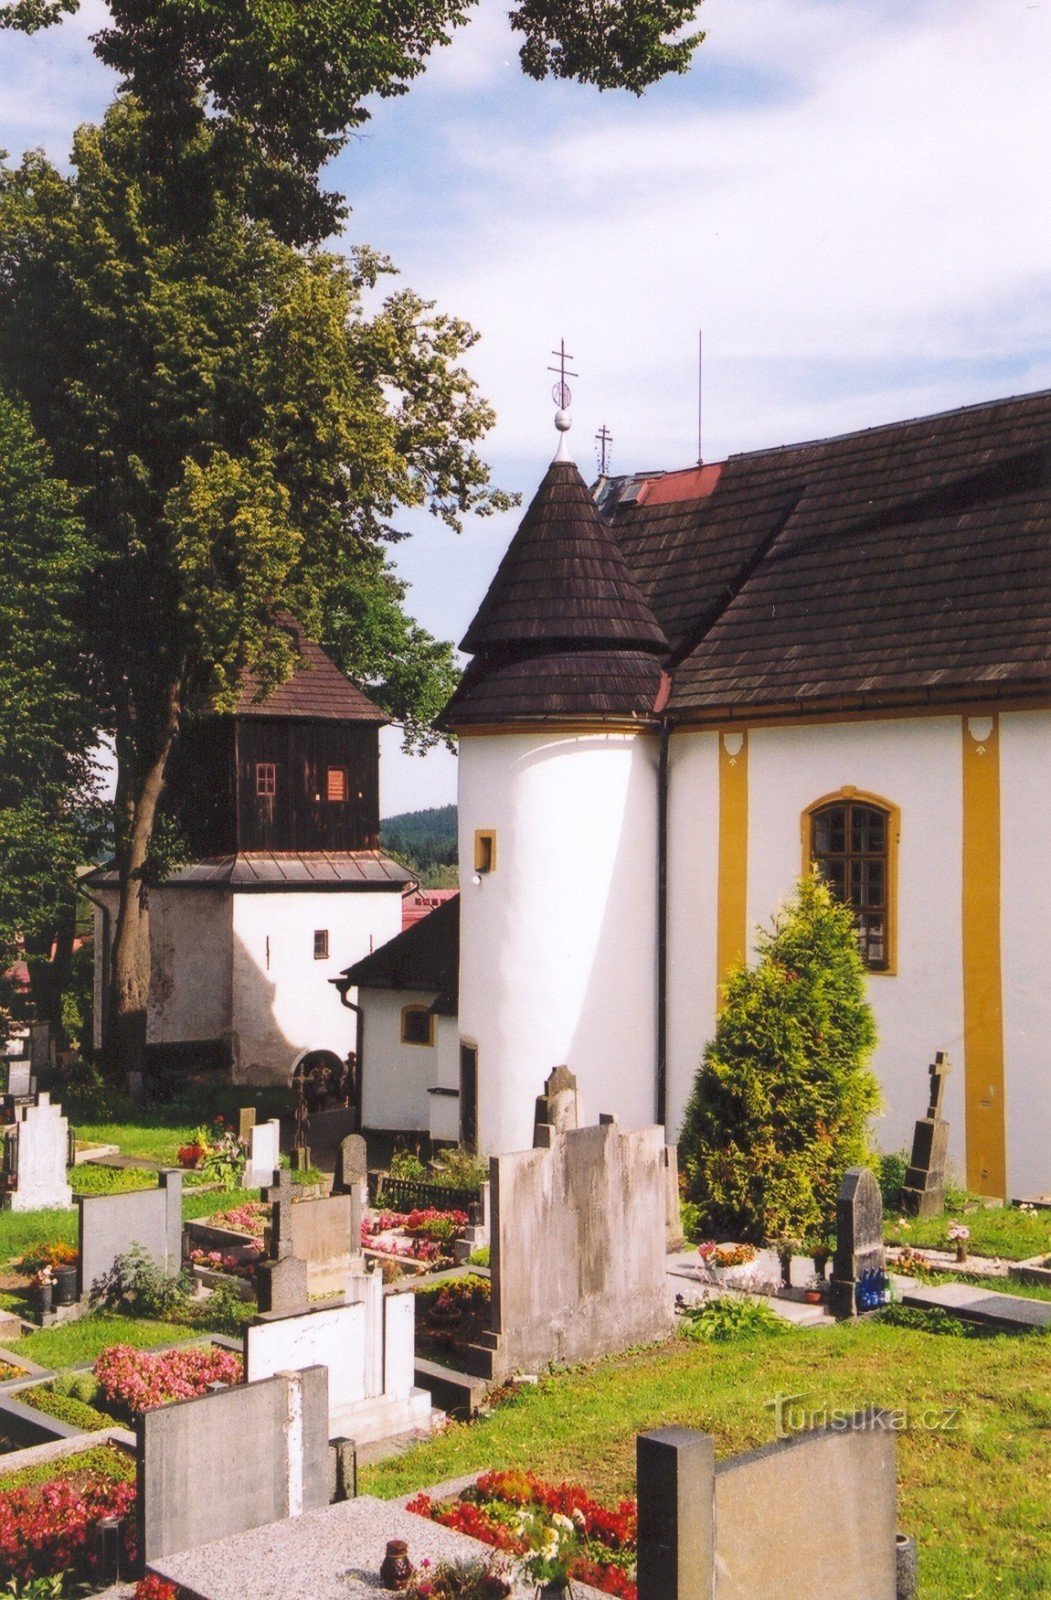 Svratka - church of St. John the Baptist